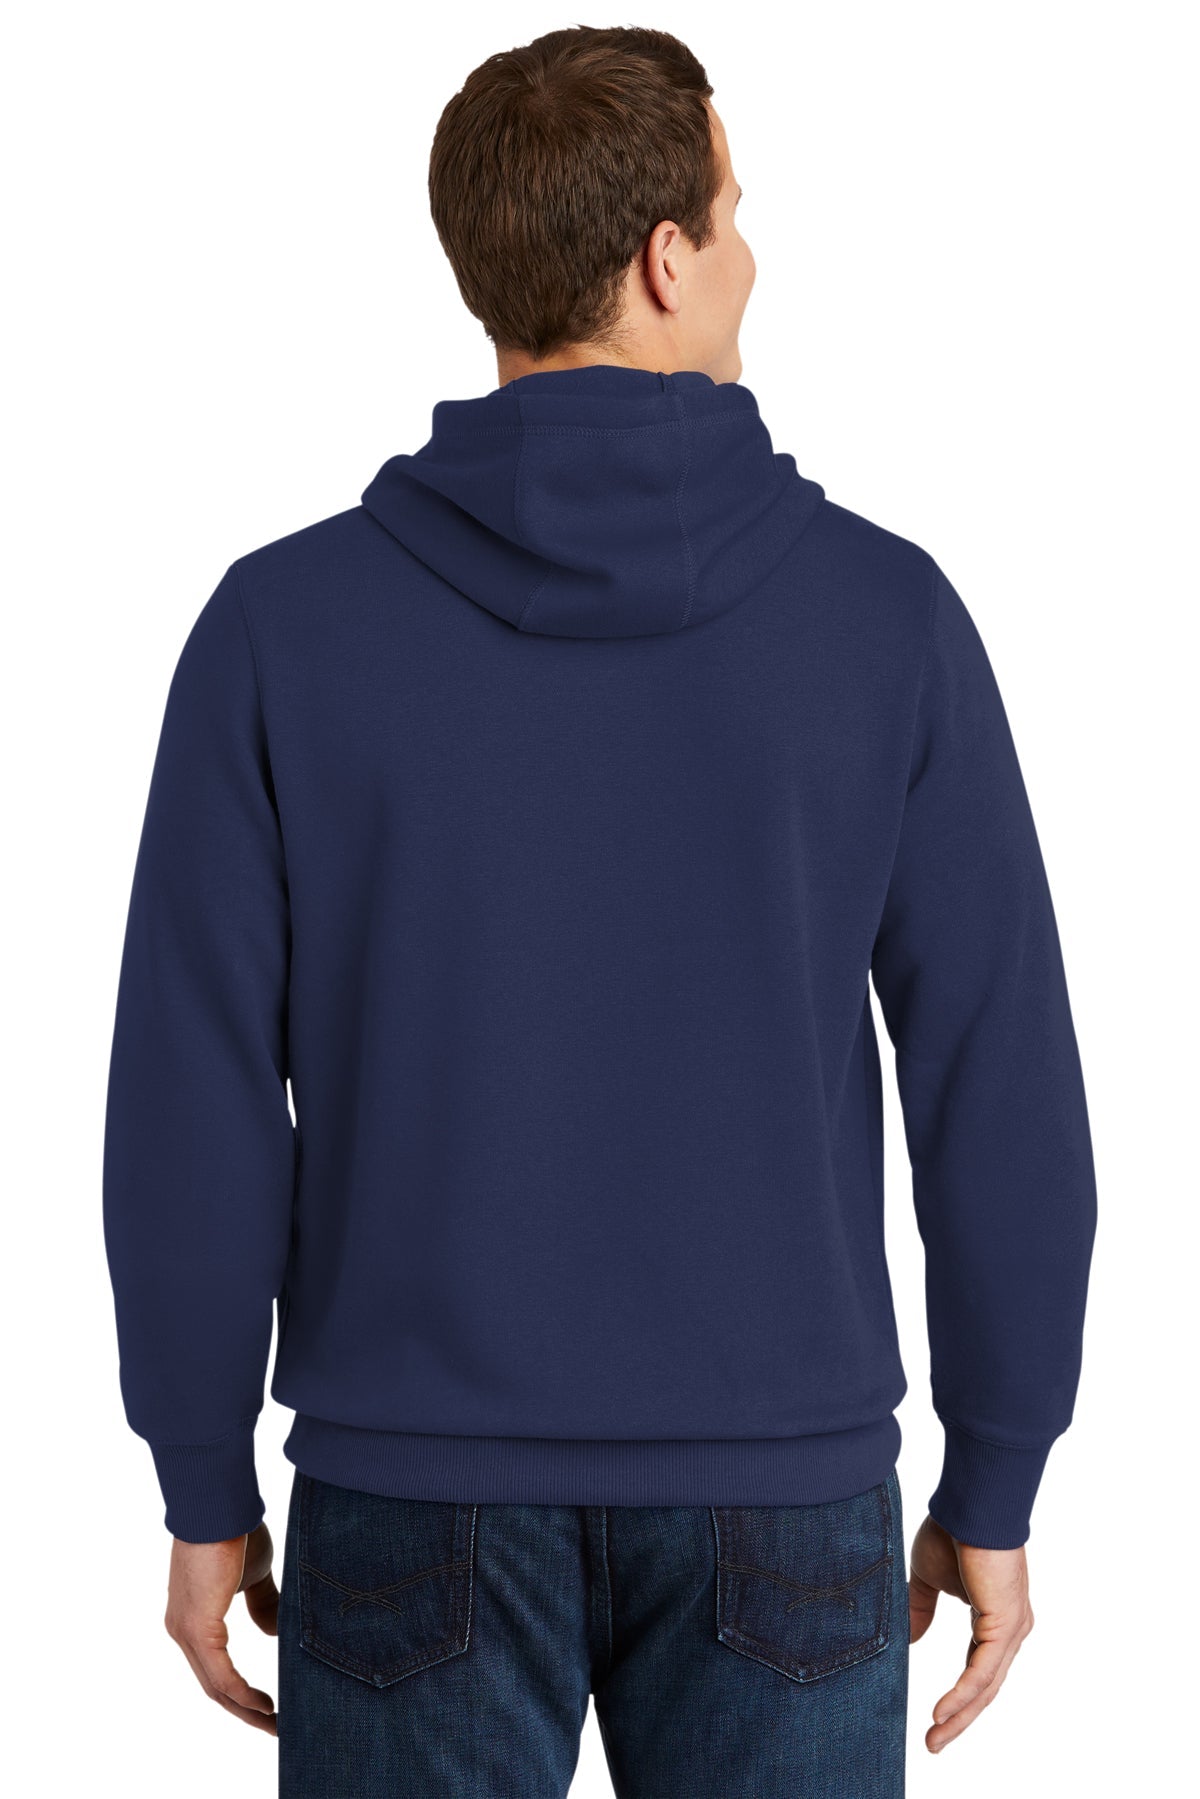 sport-tek_tst254 _true navy_company_logo_sweatshirts